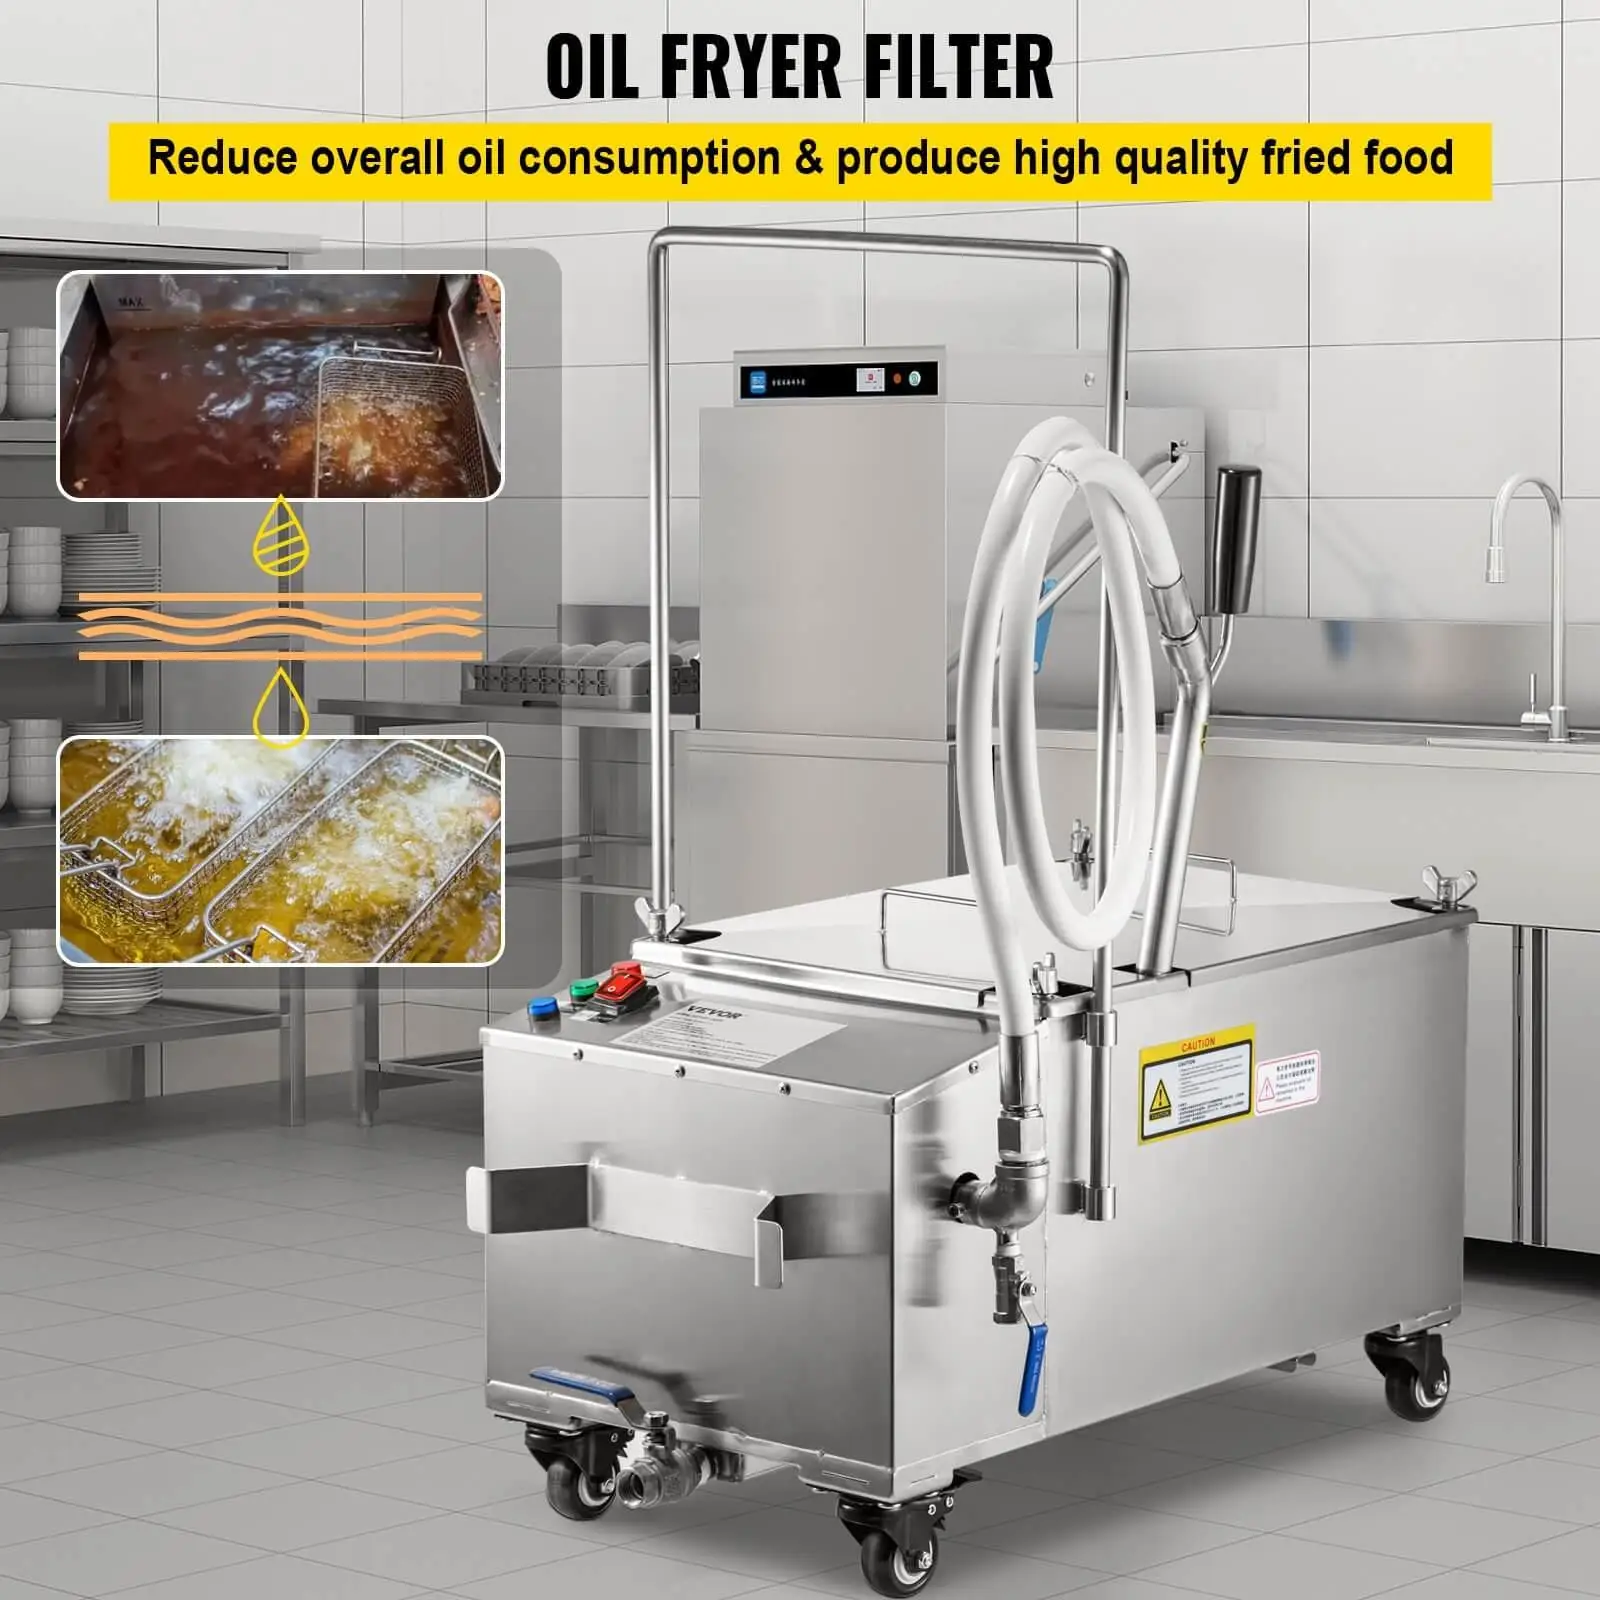 VEVOR high quality oil filter machine